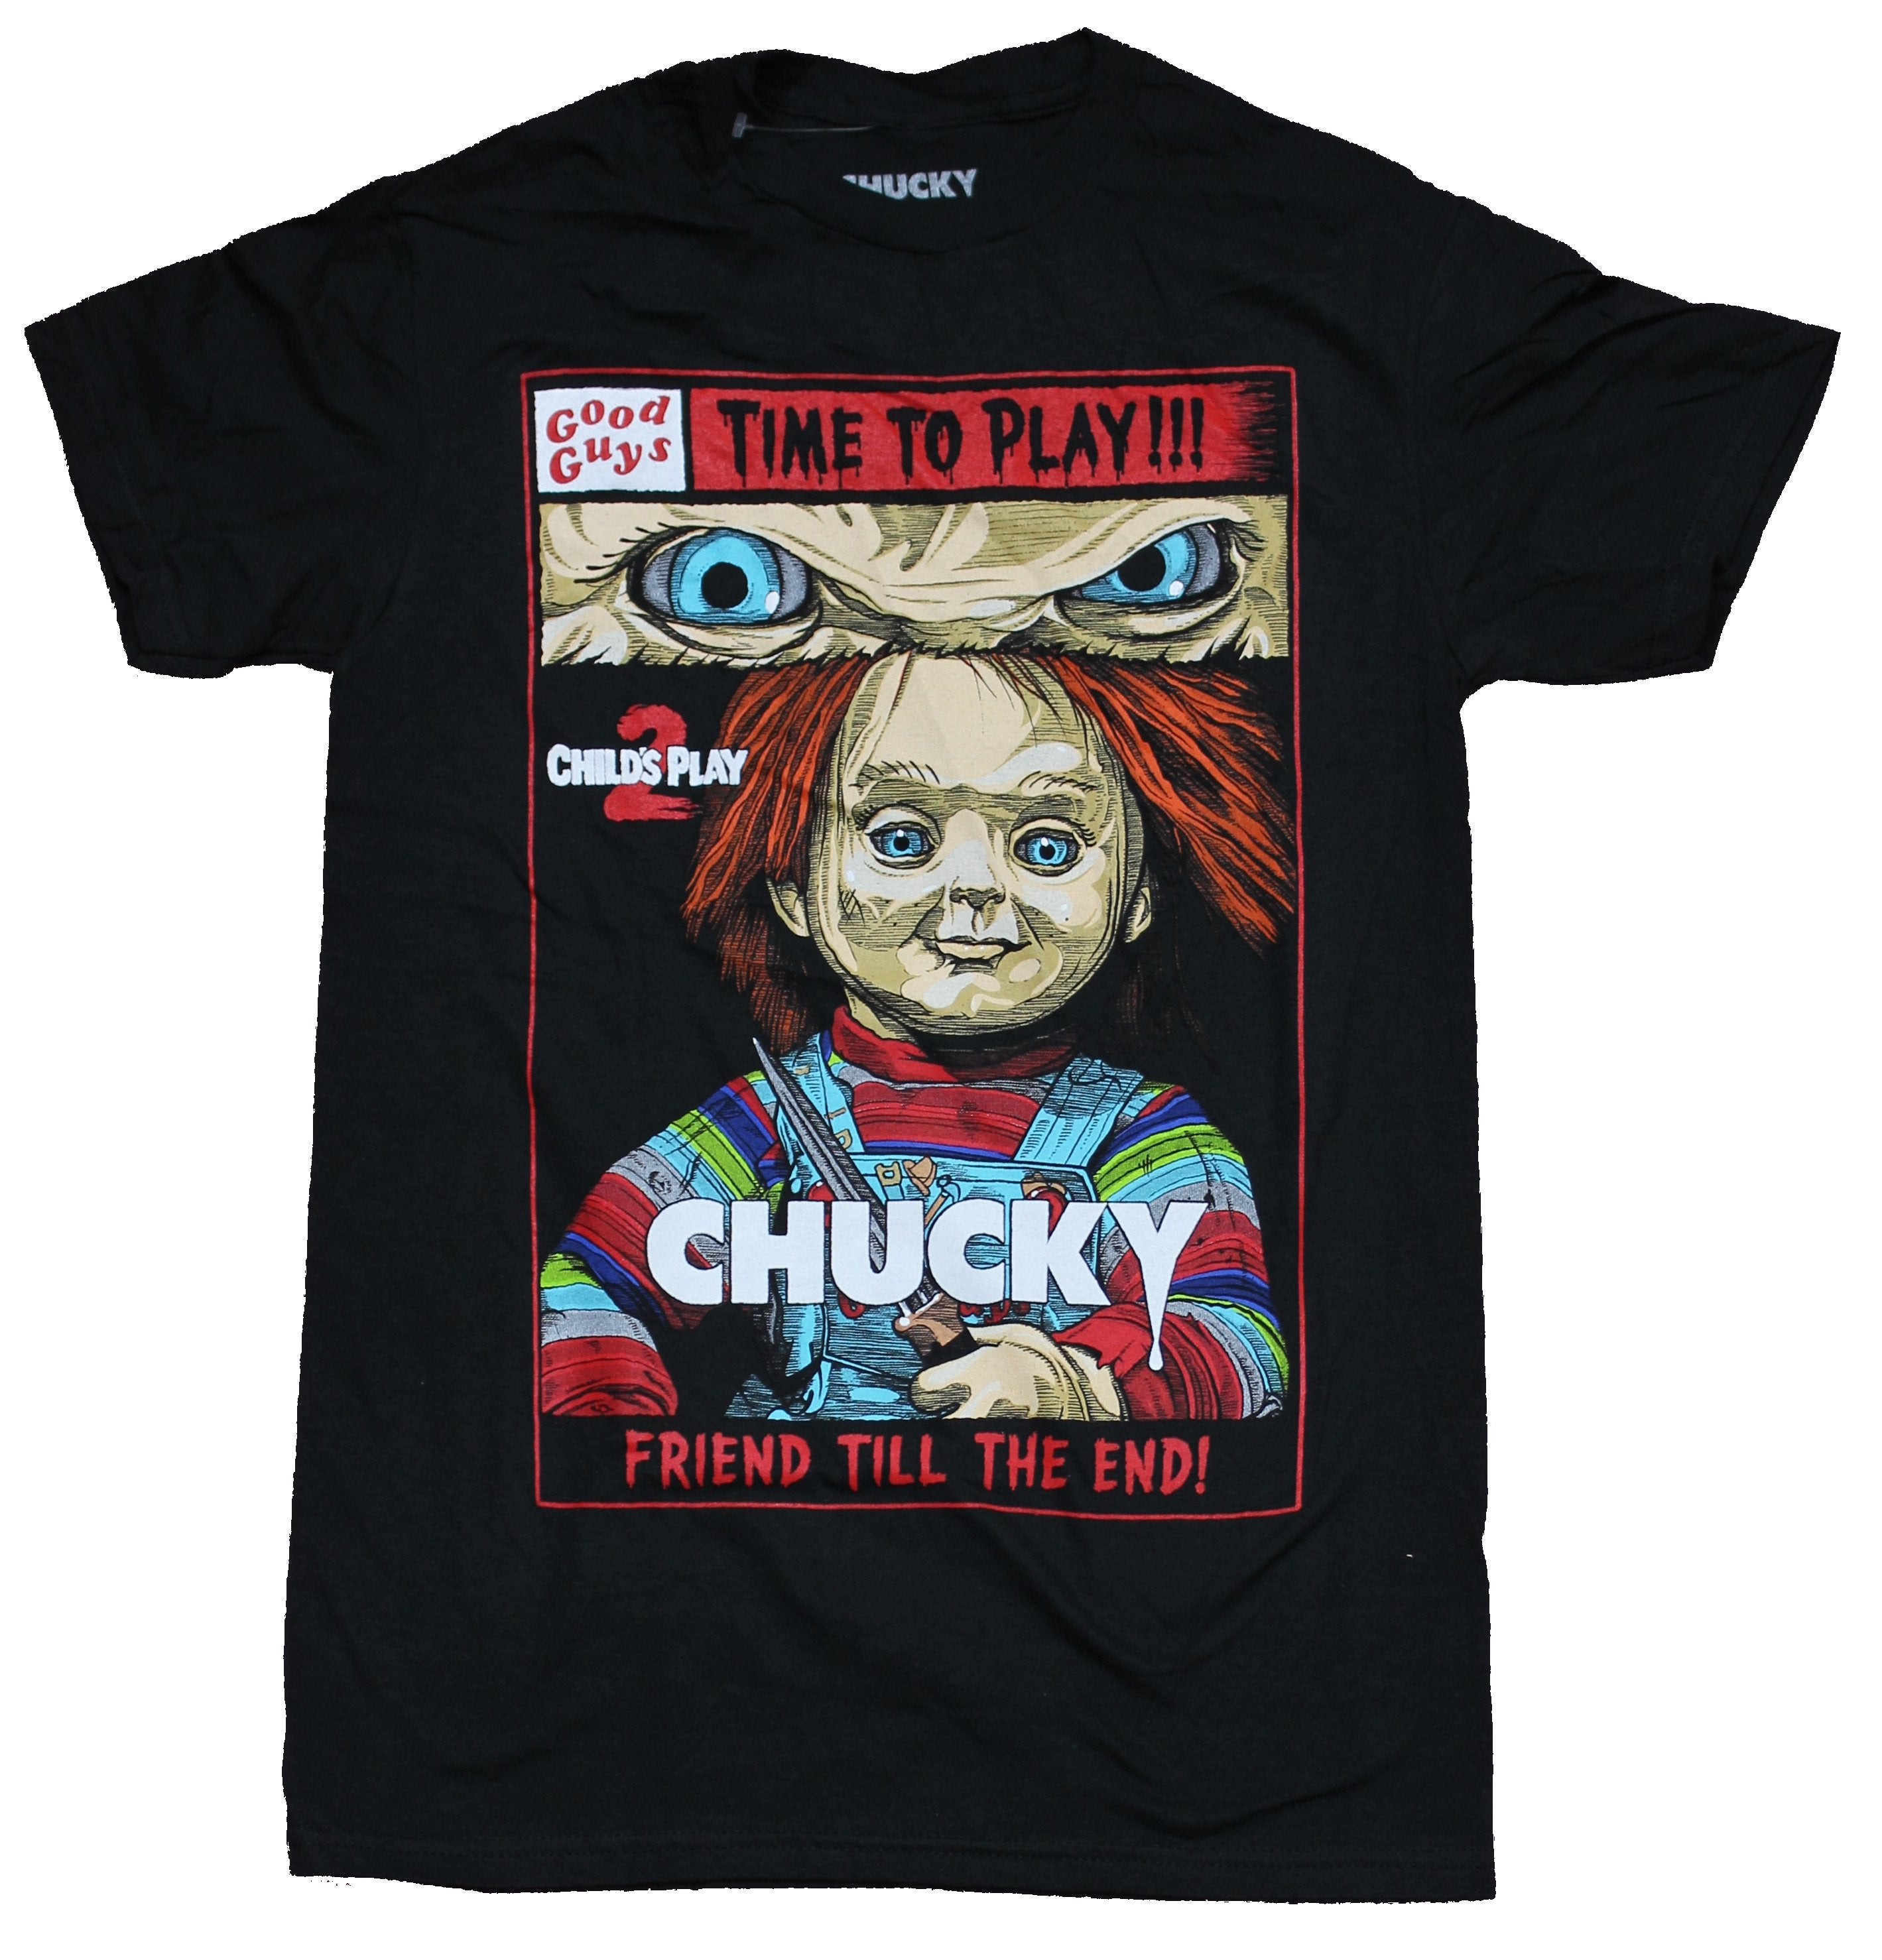 Child's Play 2  Mens T-Shirt - Chucky Good Guys Time To Play Comic Image